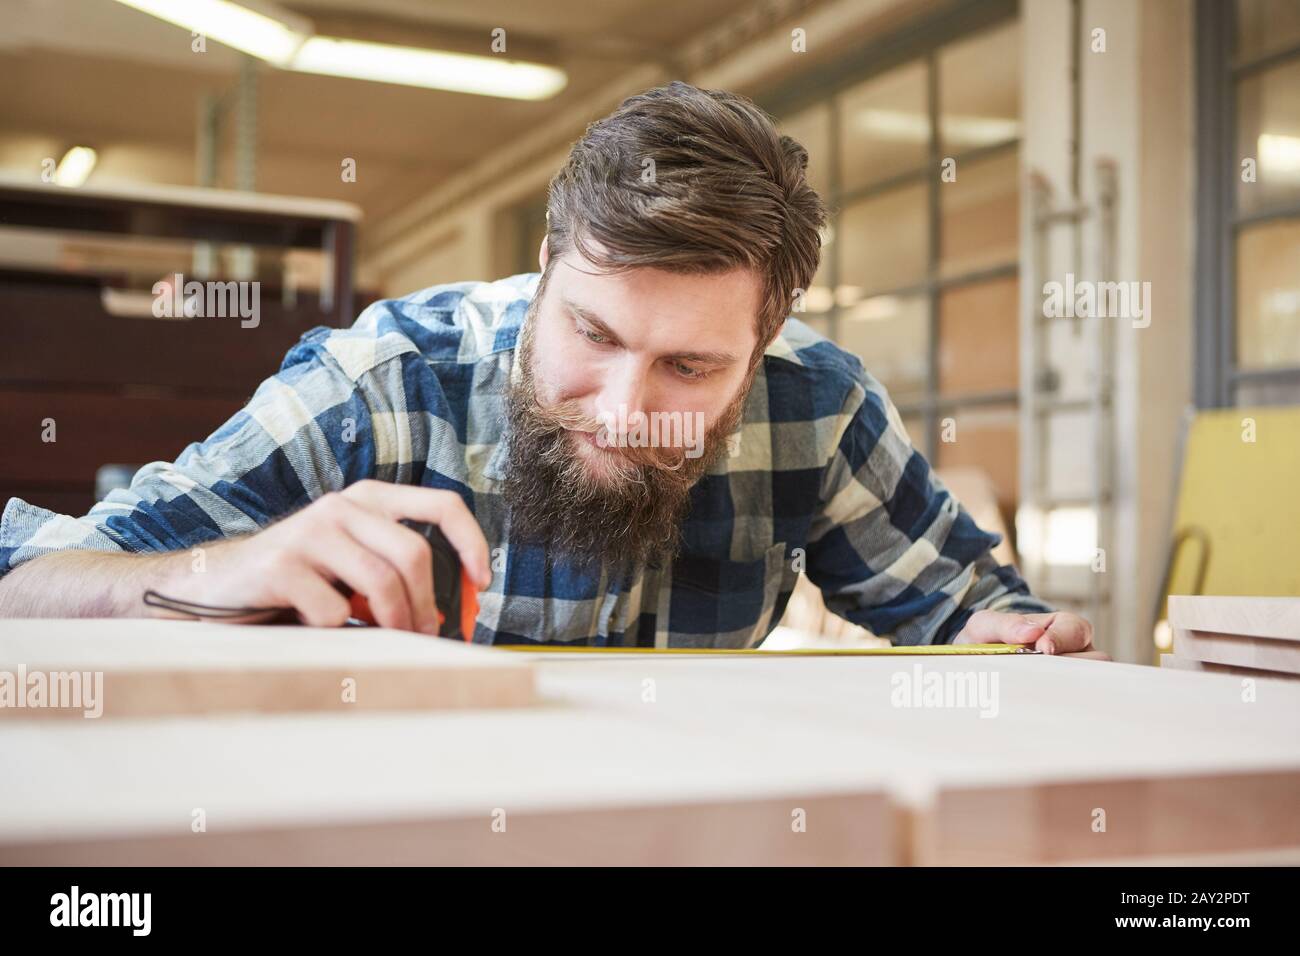 Hipster carpenter training as a furniture maker building shelves Stock Photo